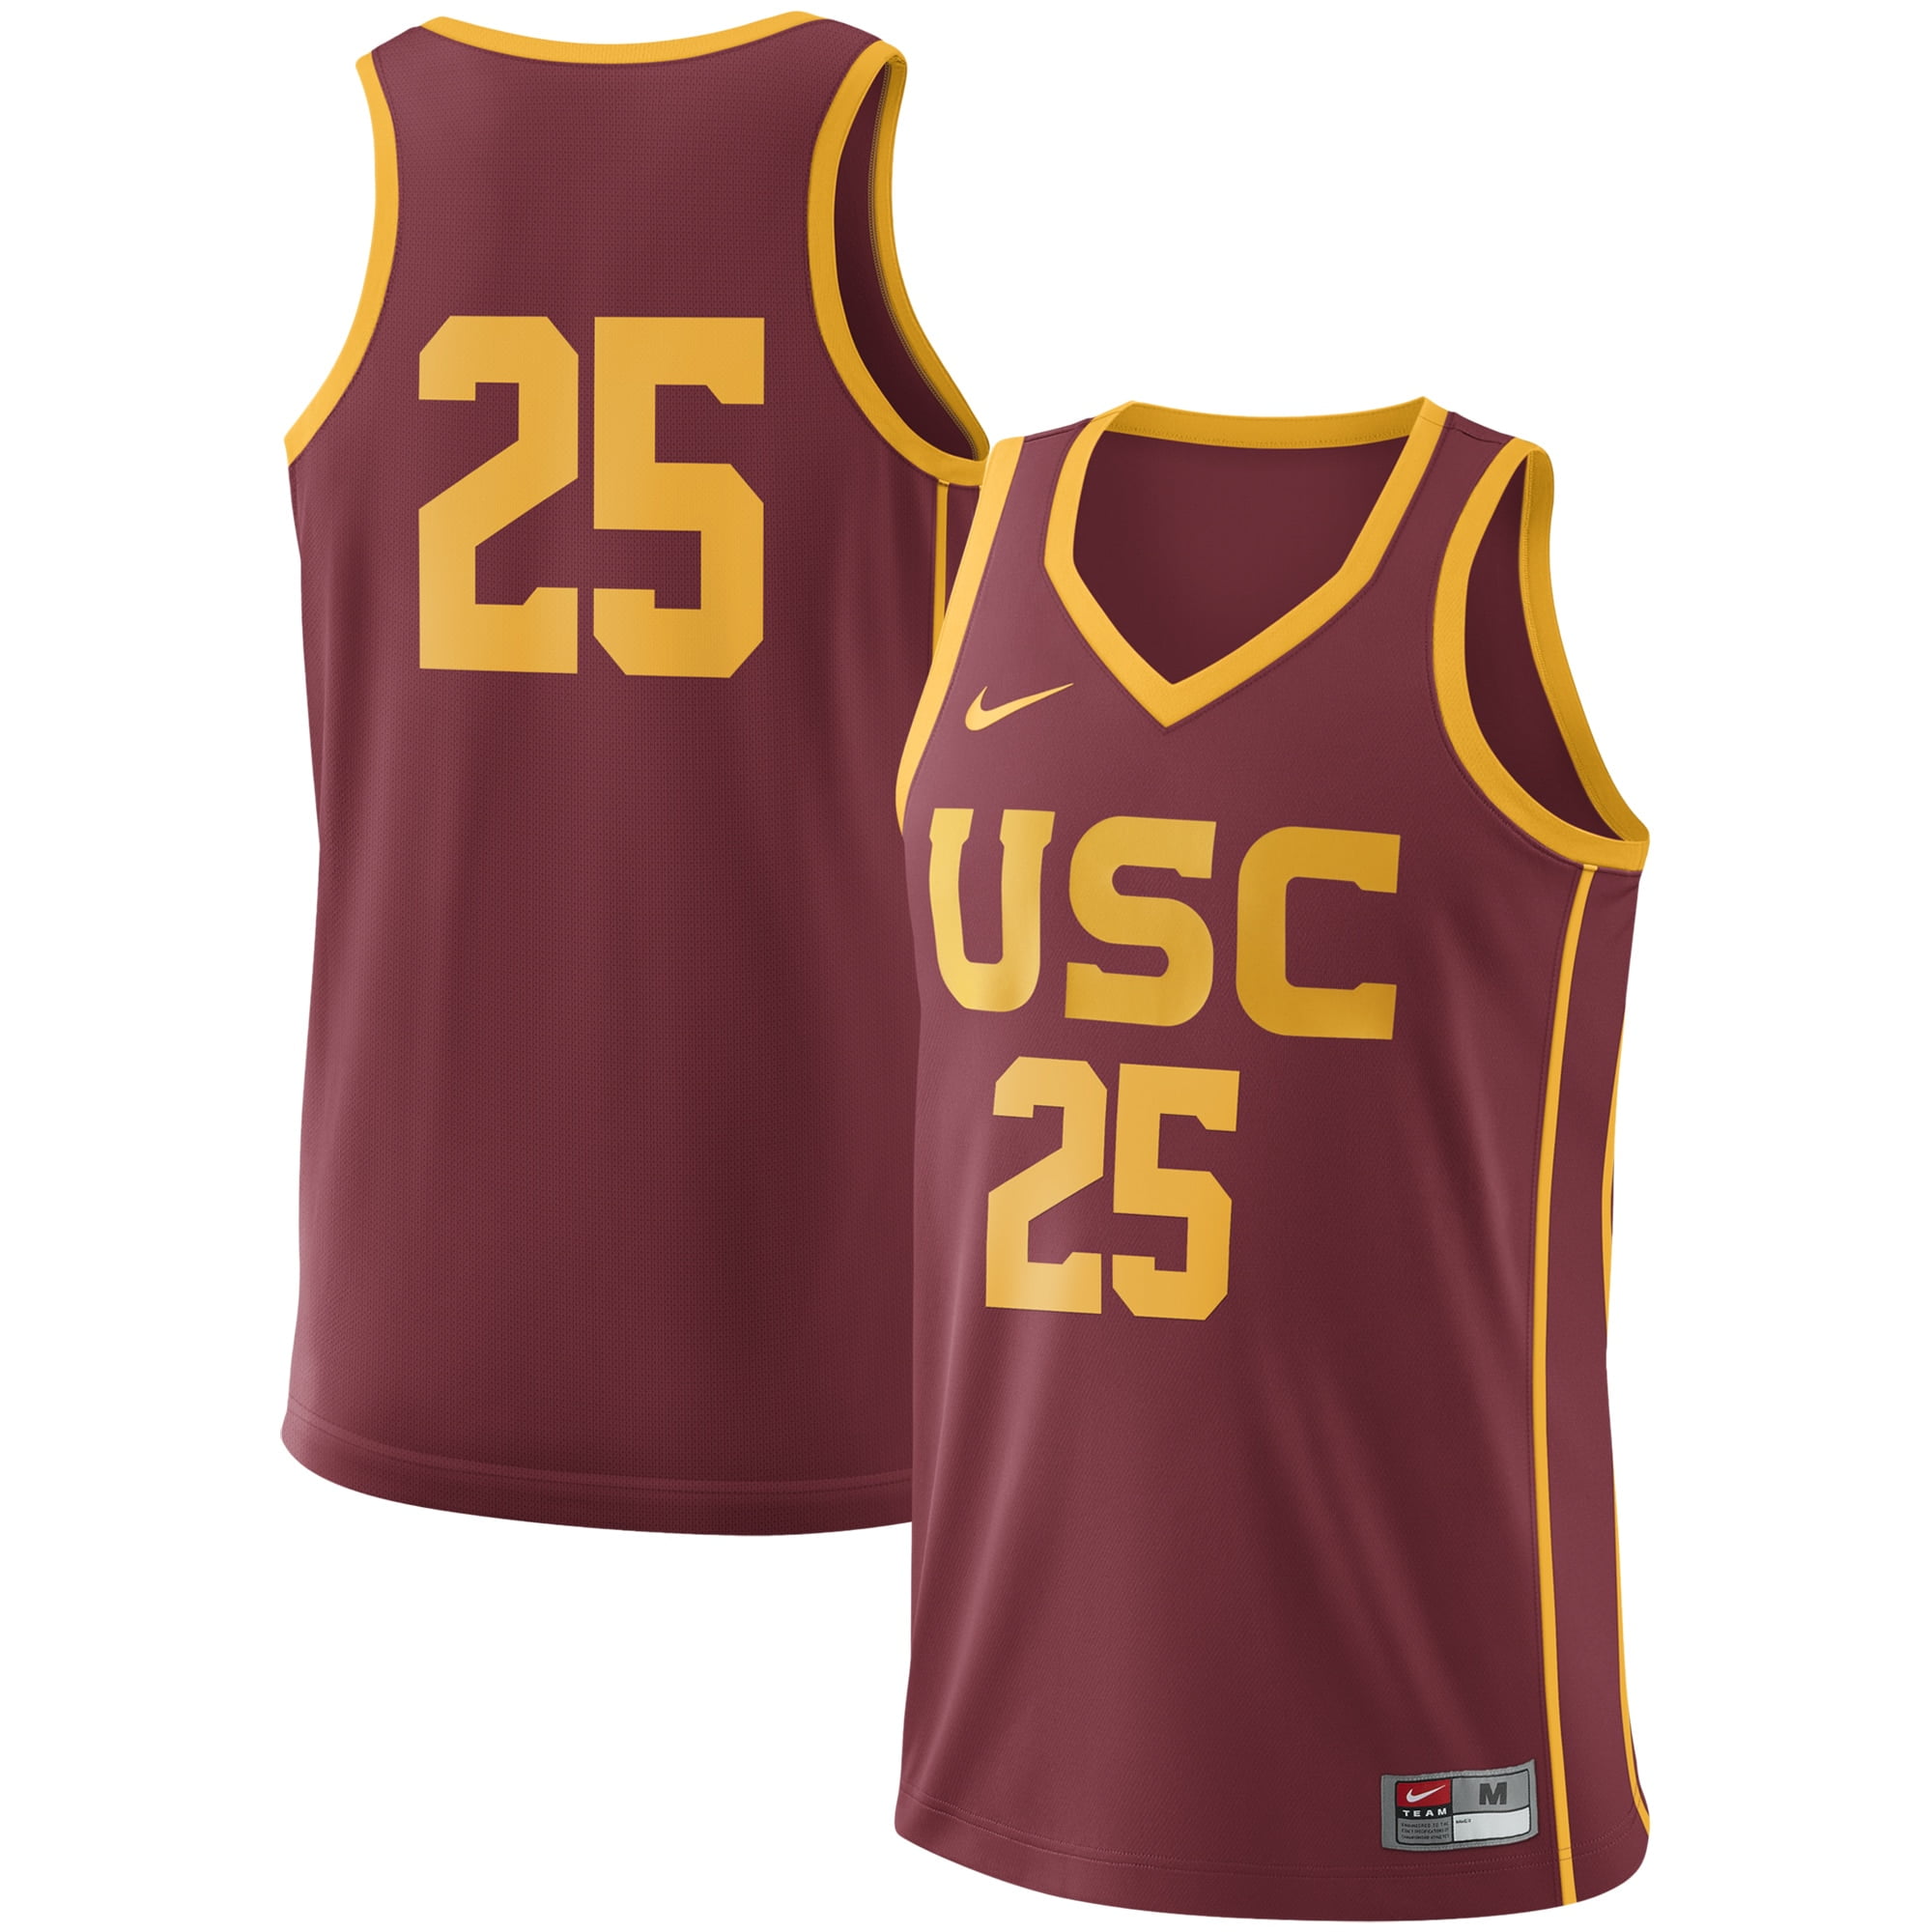 USC Trojans Nike College Replica 